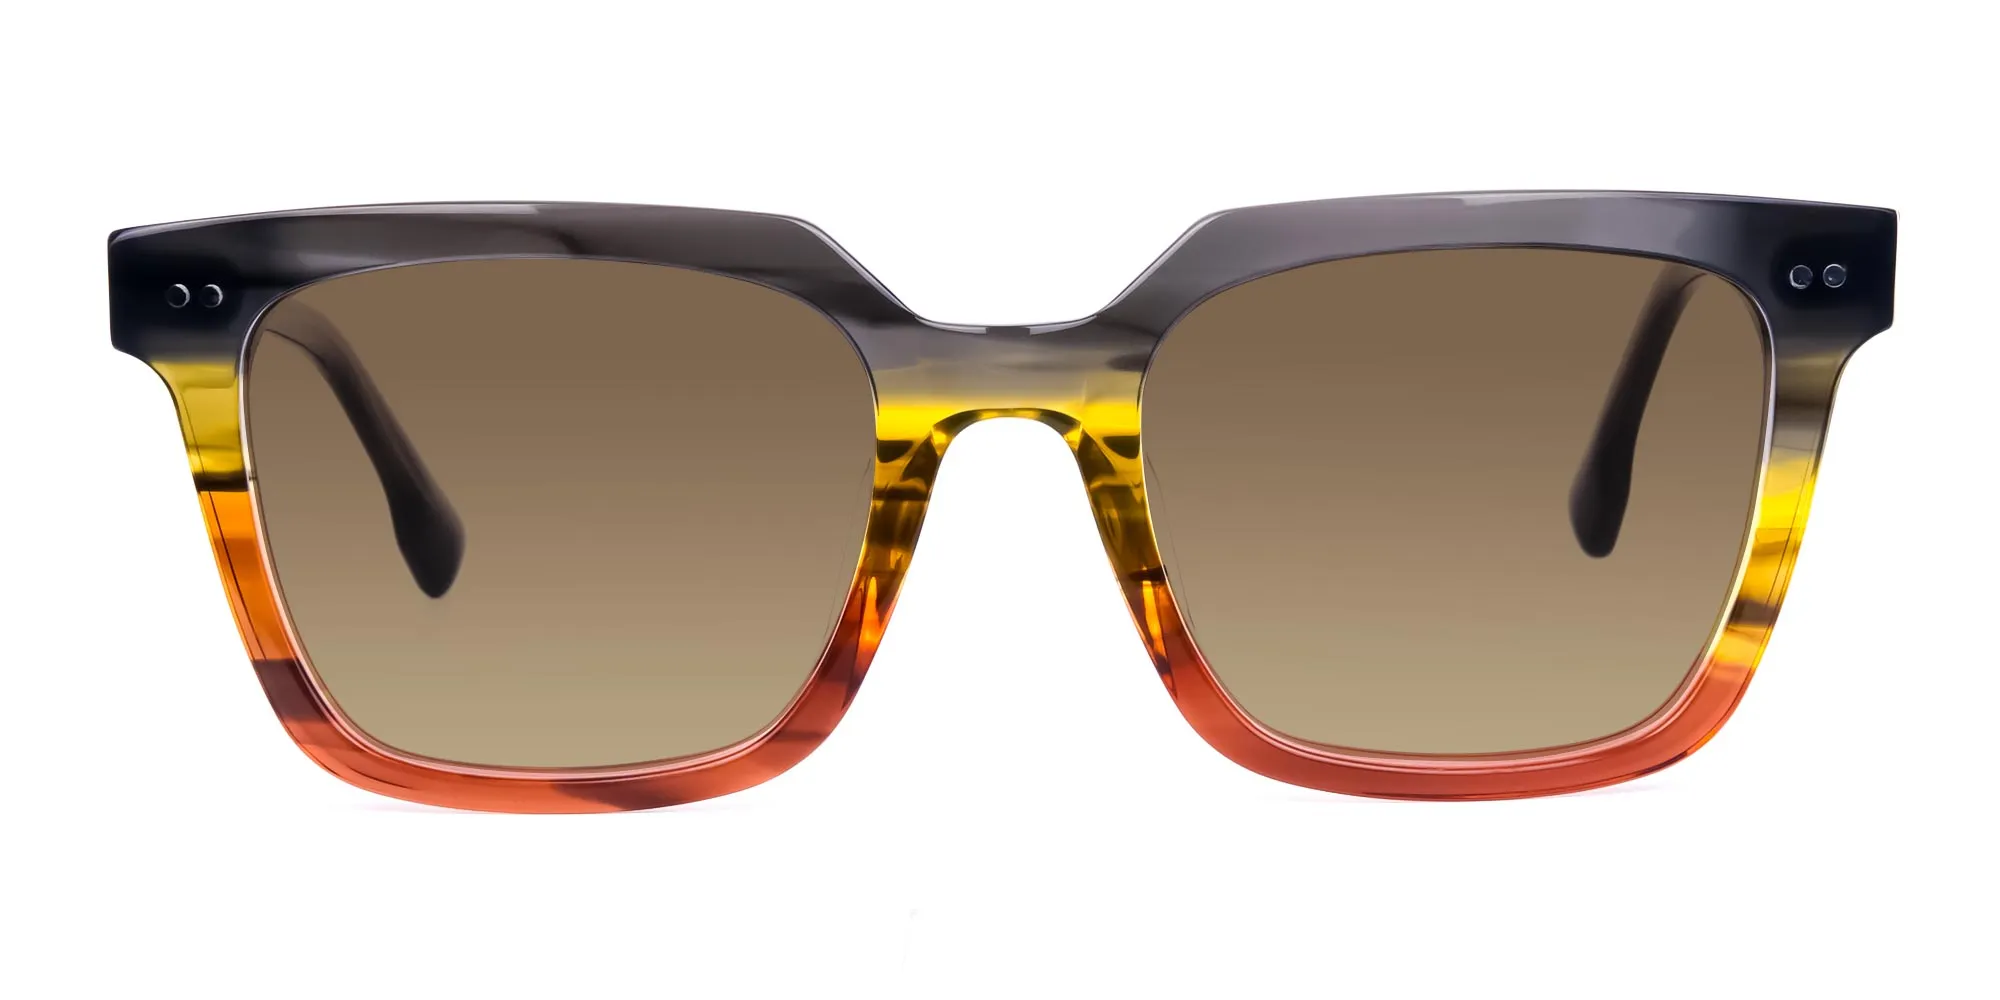 Wayfarer-Brown-Sunglasses-with-Brown-Tint-2